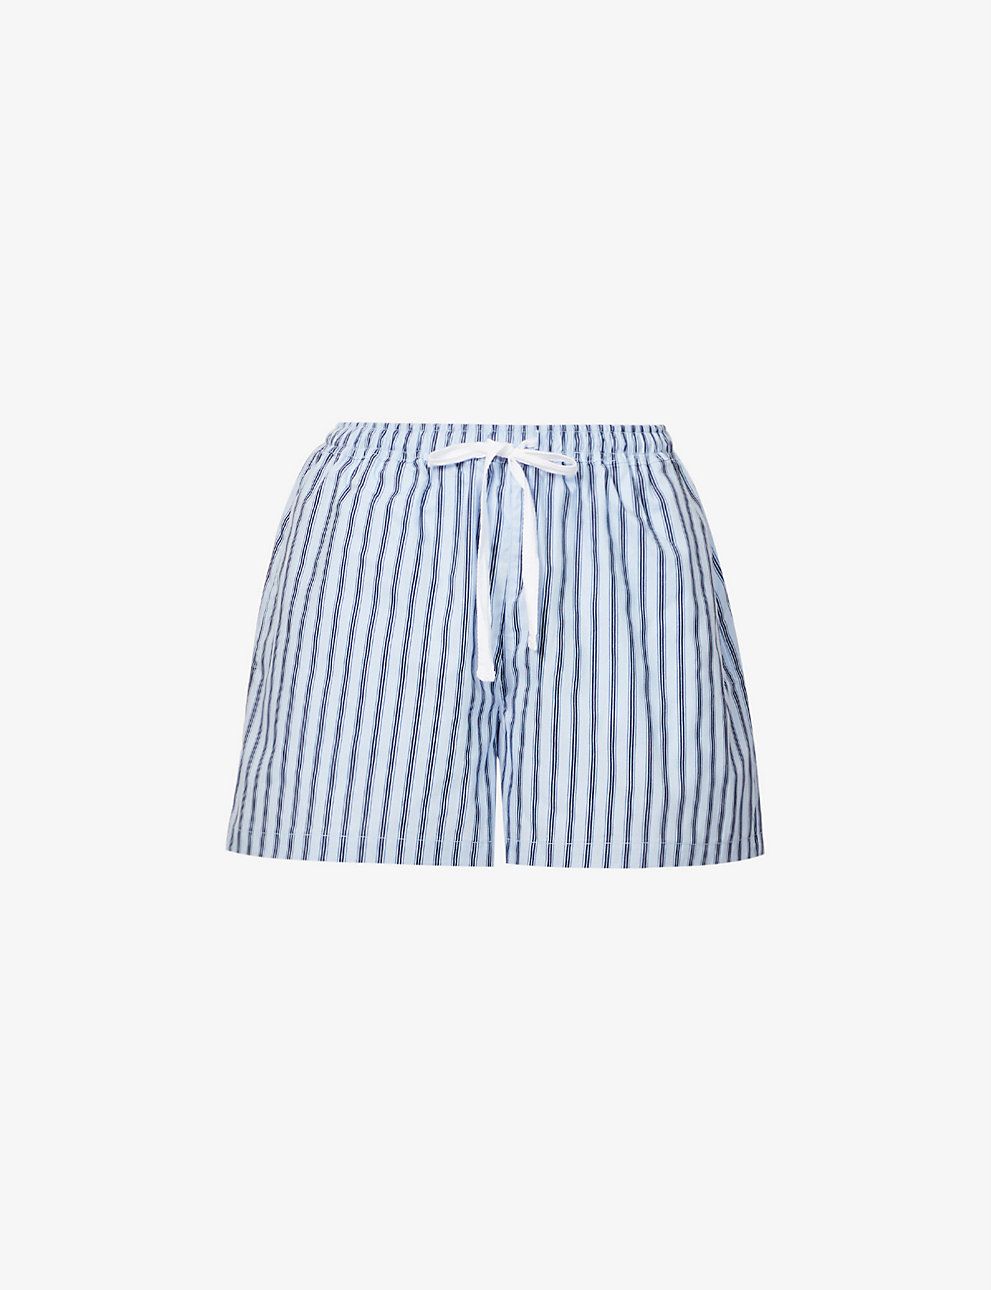 Fred striped cotton shorts | Selfridges